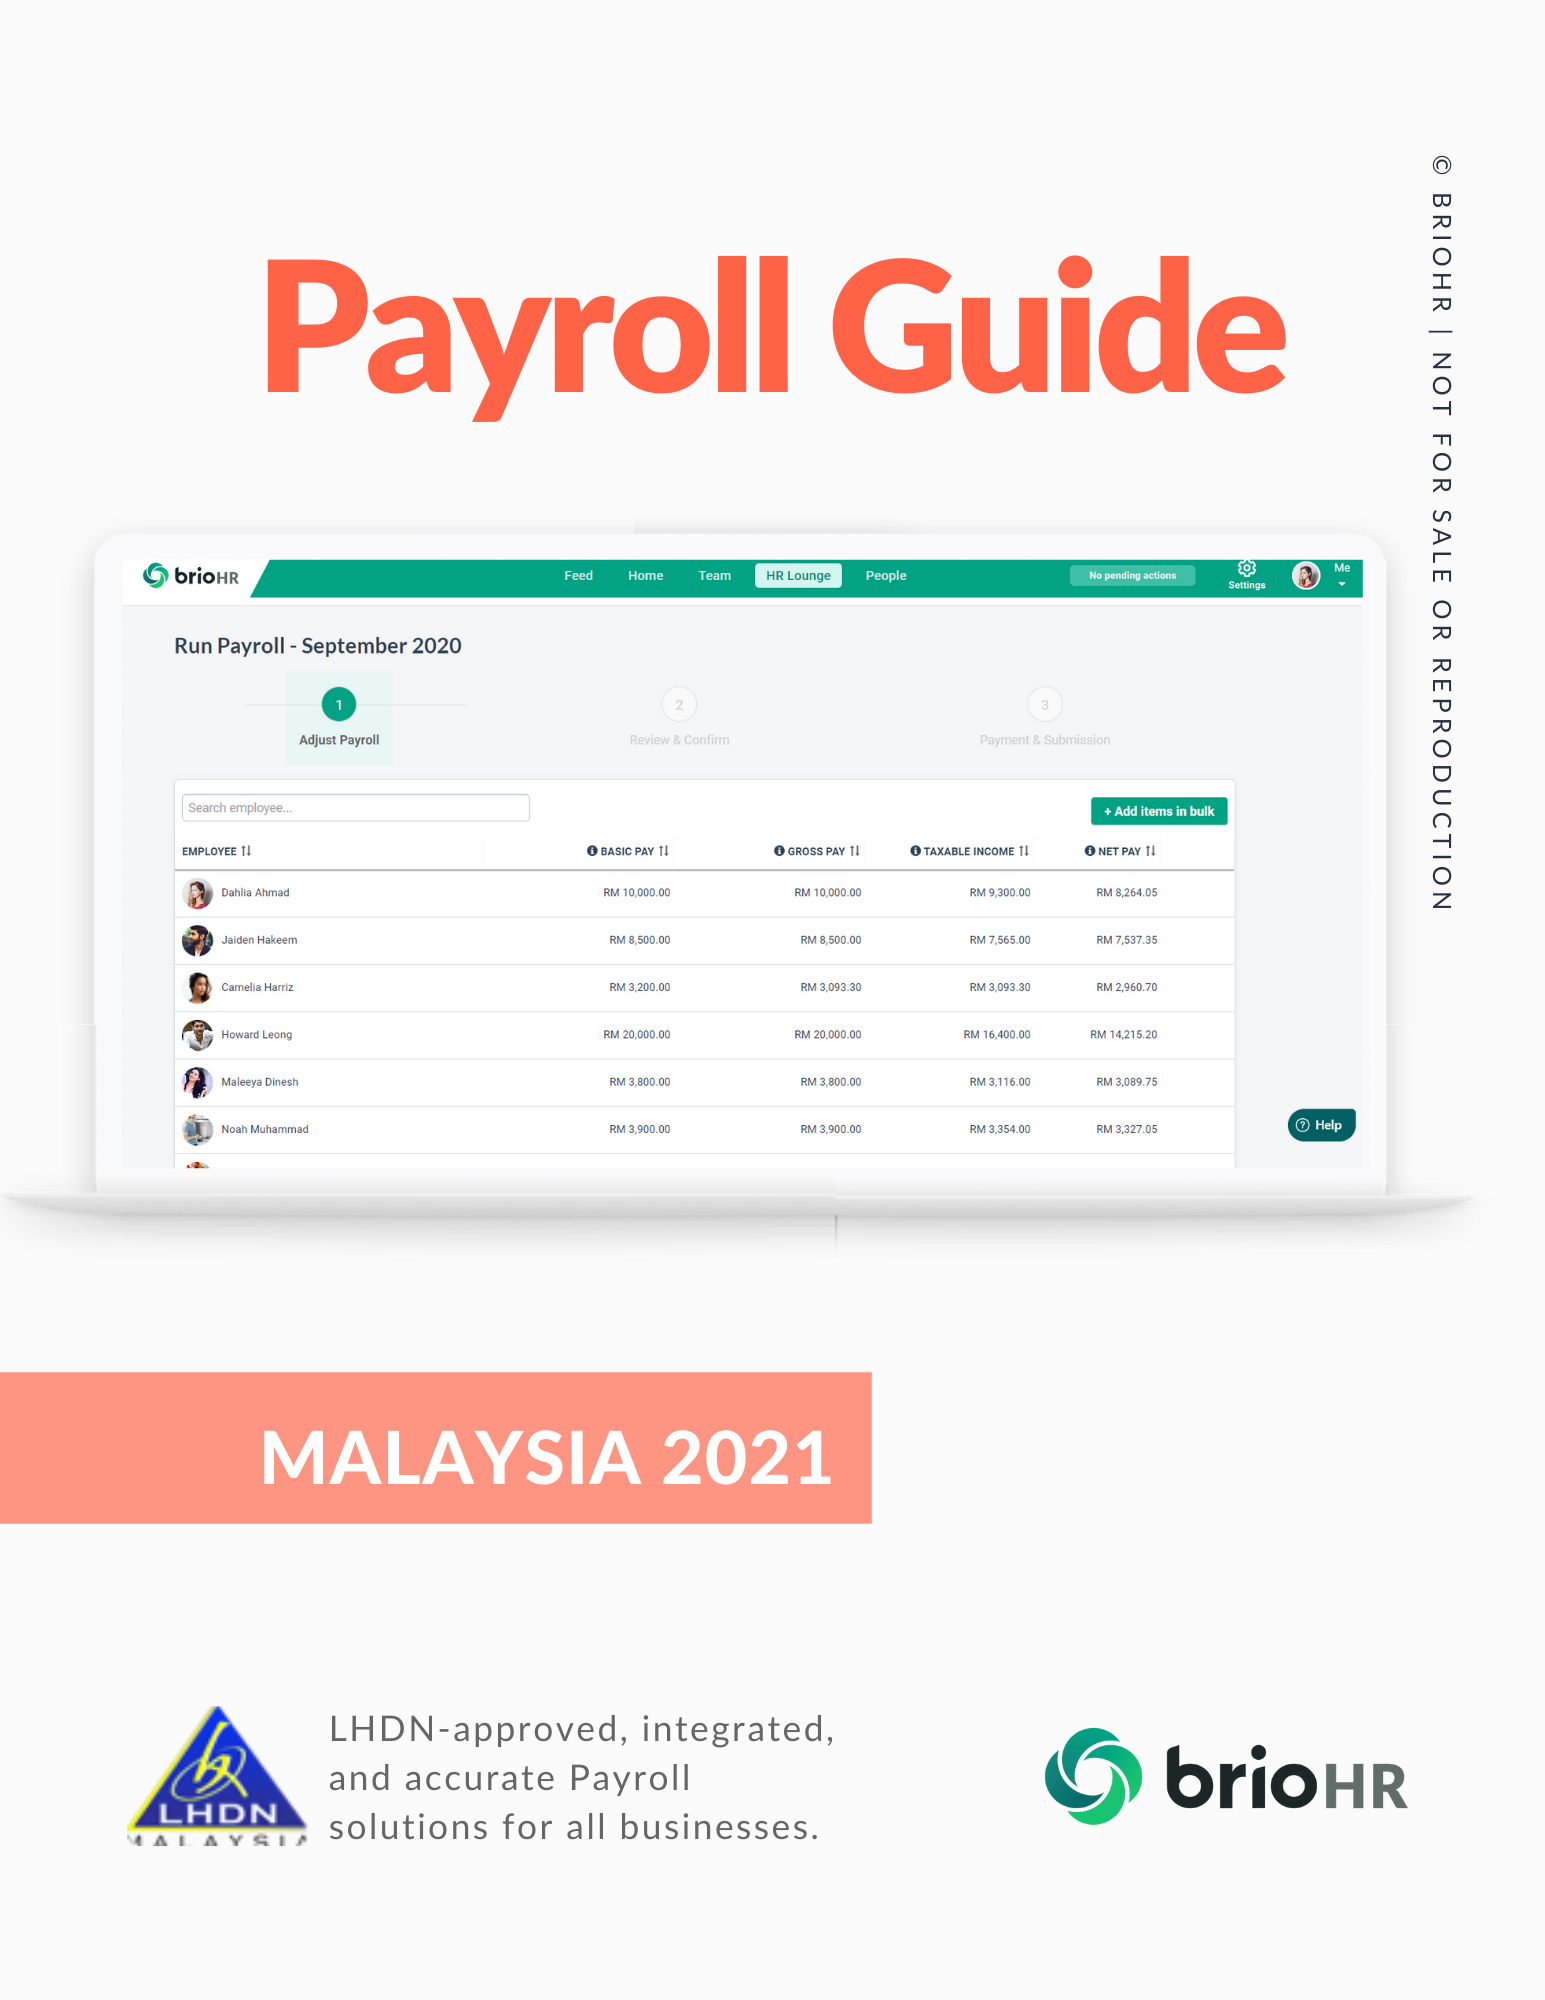 BrioHR Payroll Guide Malaysia 2021